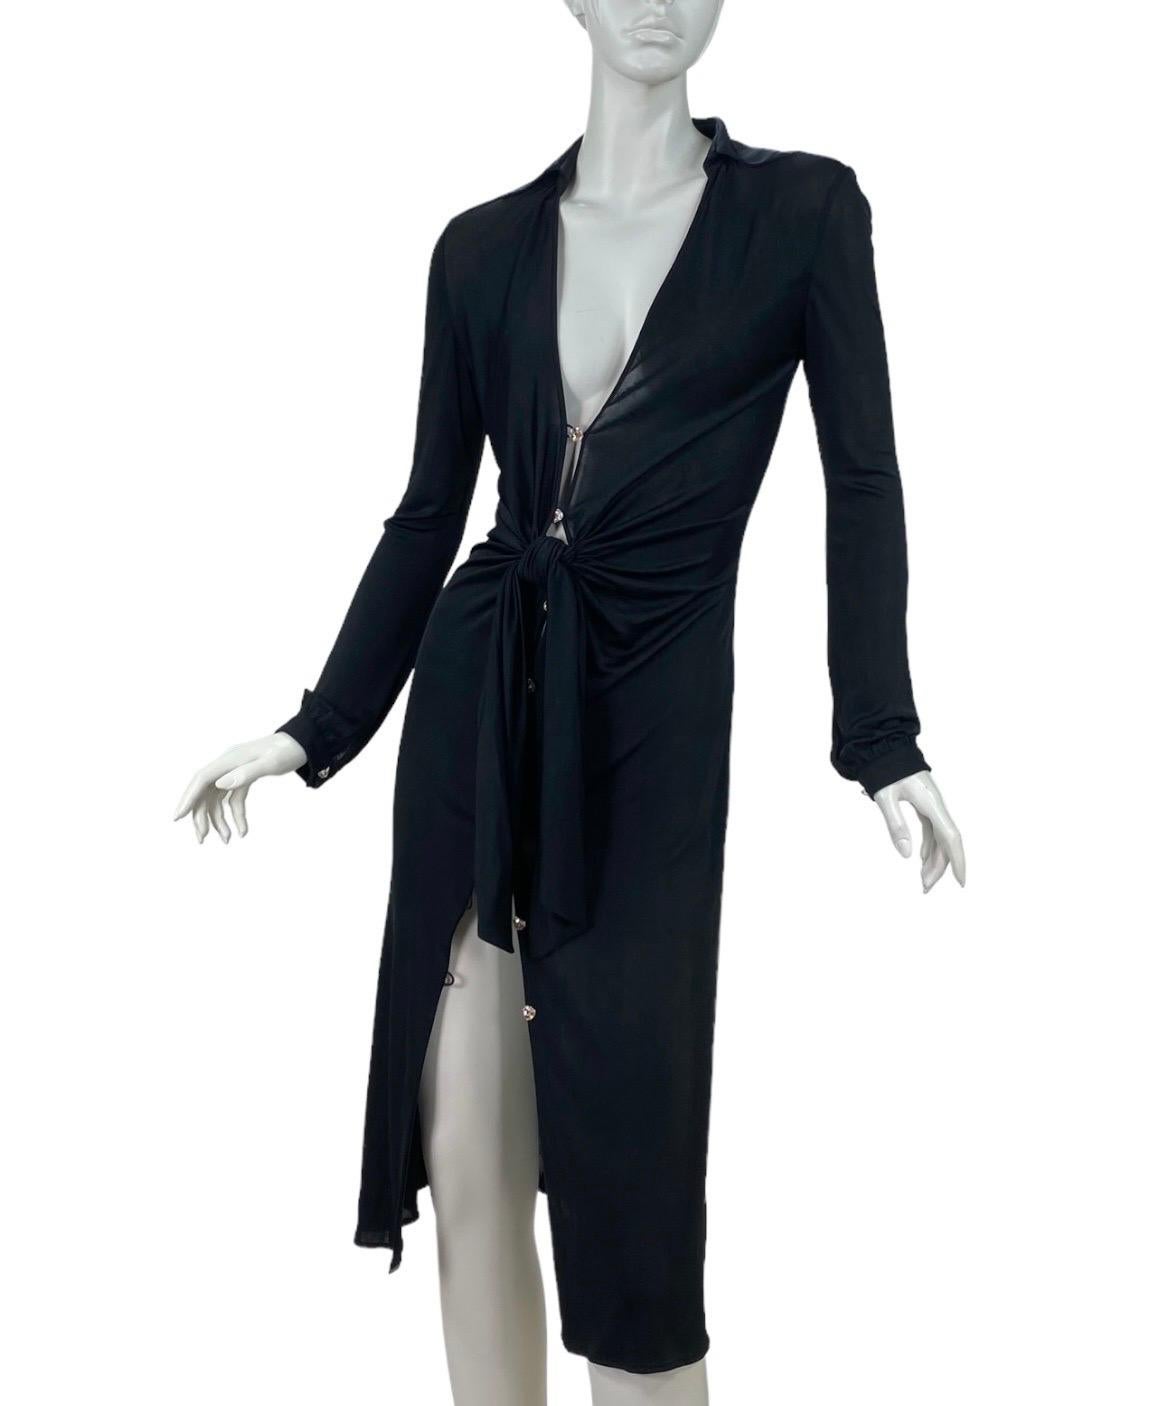 S/S 2000 Vintage Gianni Versace Couture Runway Black Deep V-Neck Dress For Sale 5